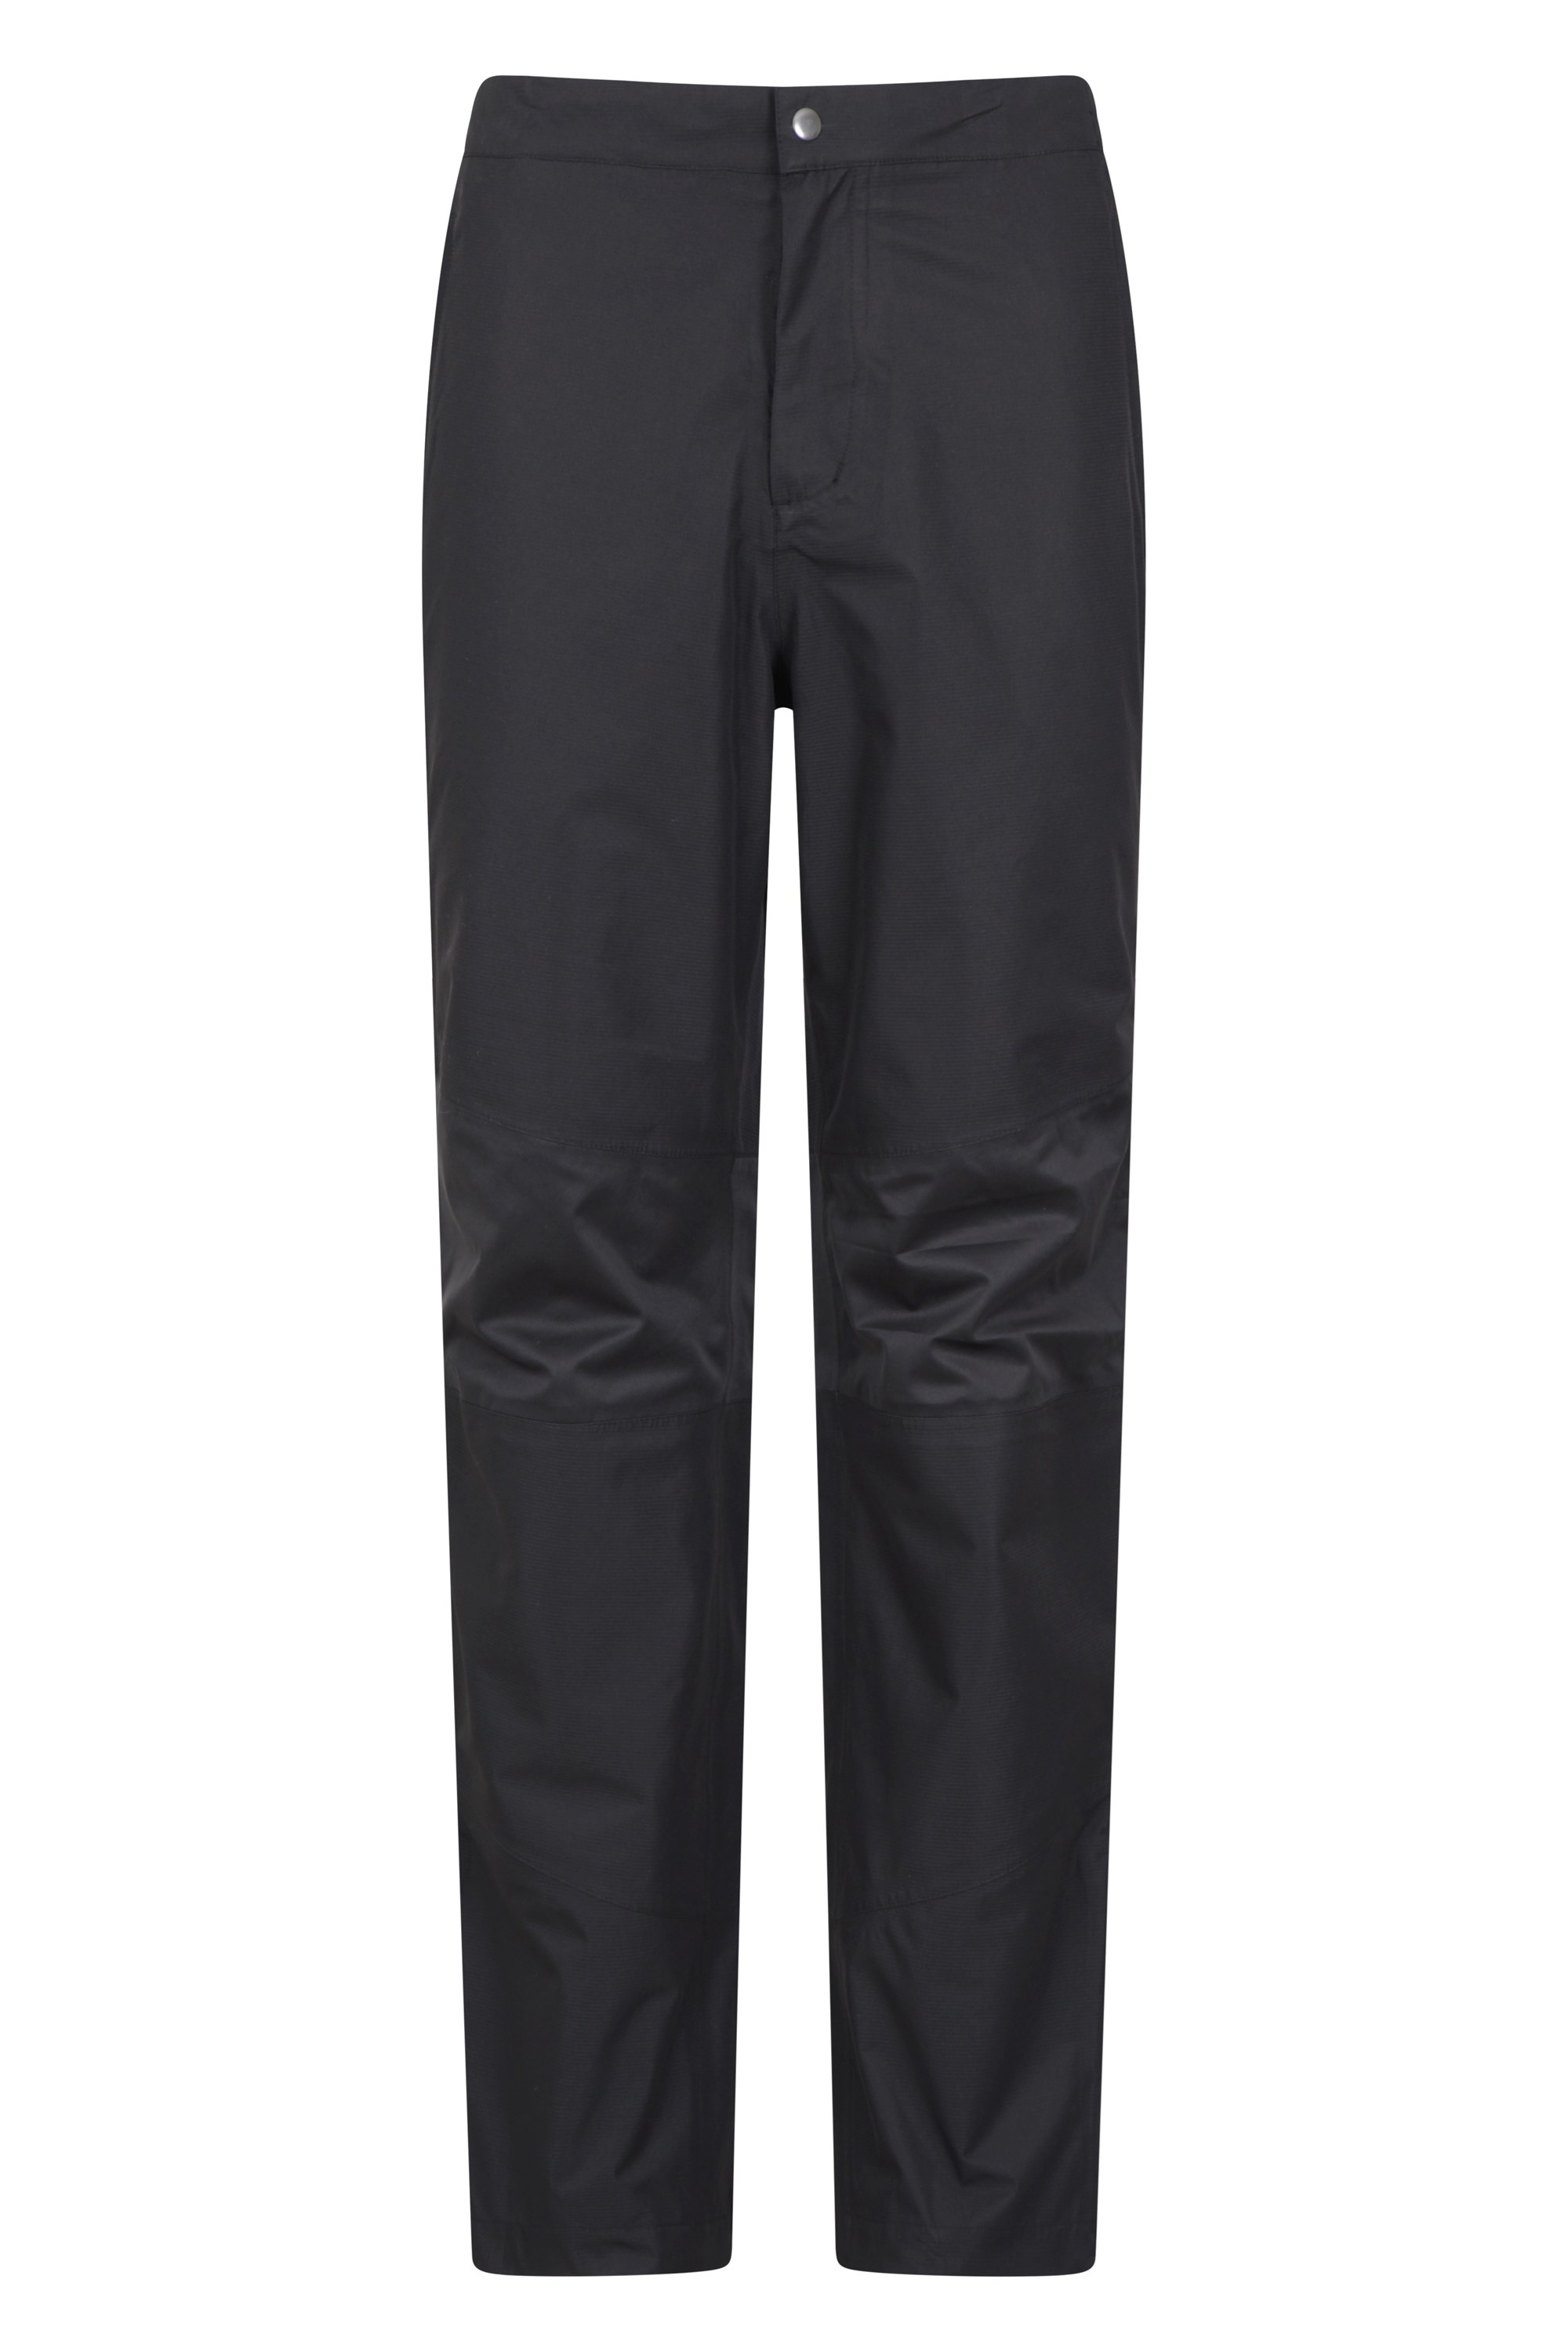 Hillwalker Extreme Mens Waterproof Trousers - Short Length - Black